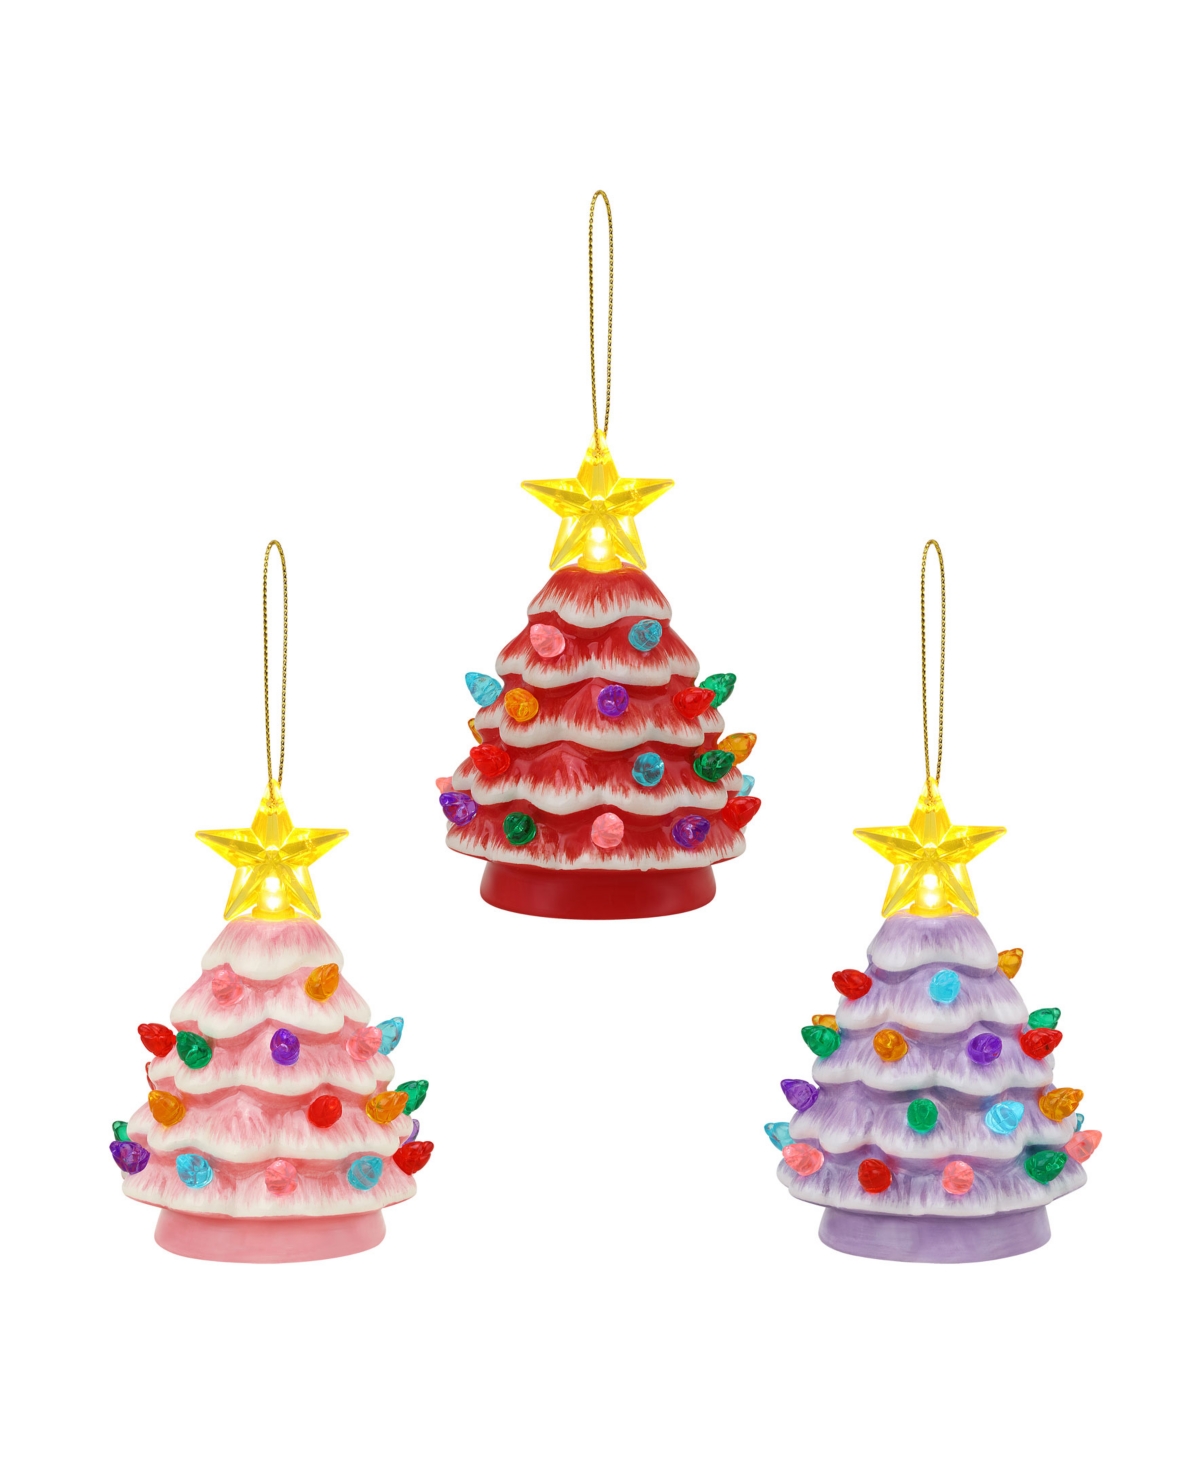 Mr. Christmas 4" Nostalgic Ceramic Lit Tree Ornaments Pink, Red, Lavender, Set Of 3 In Multi